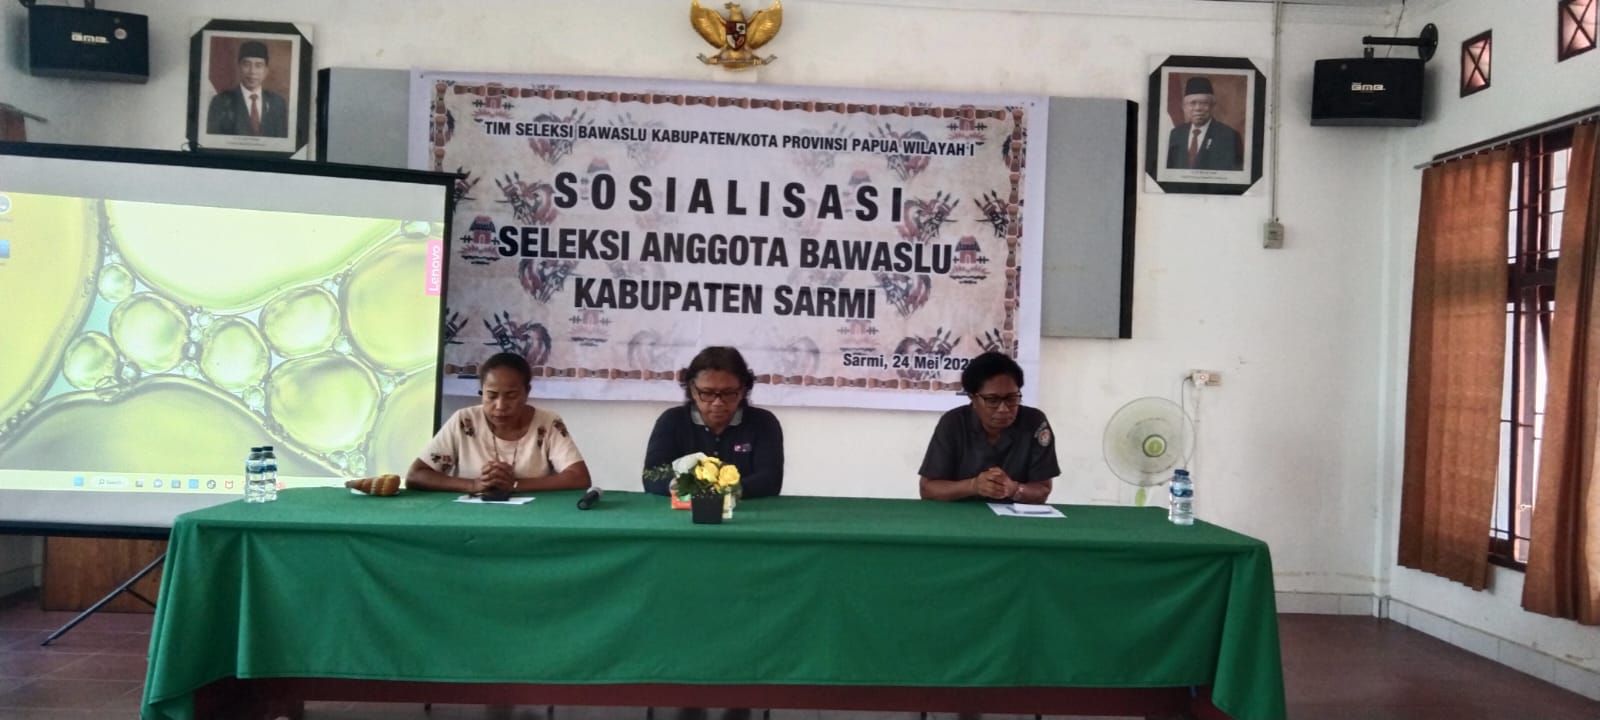 Suasana Tim seleksi (timsel) anggota Bawaslu Kabupaten/Kota Provinsi Papua melakukan sosialisasi di Kabupaten Sarmi